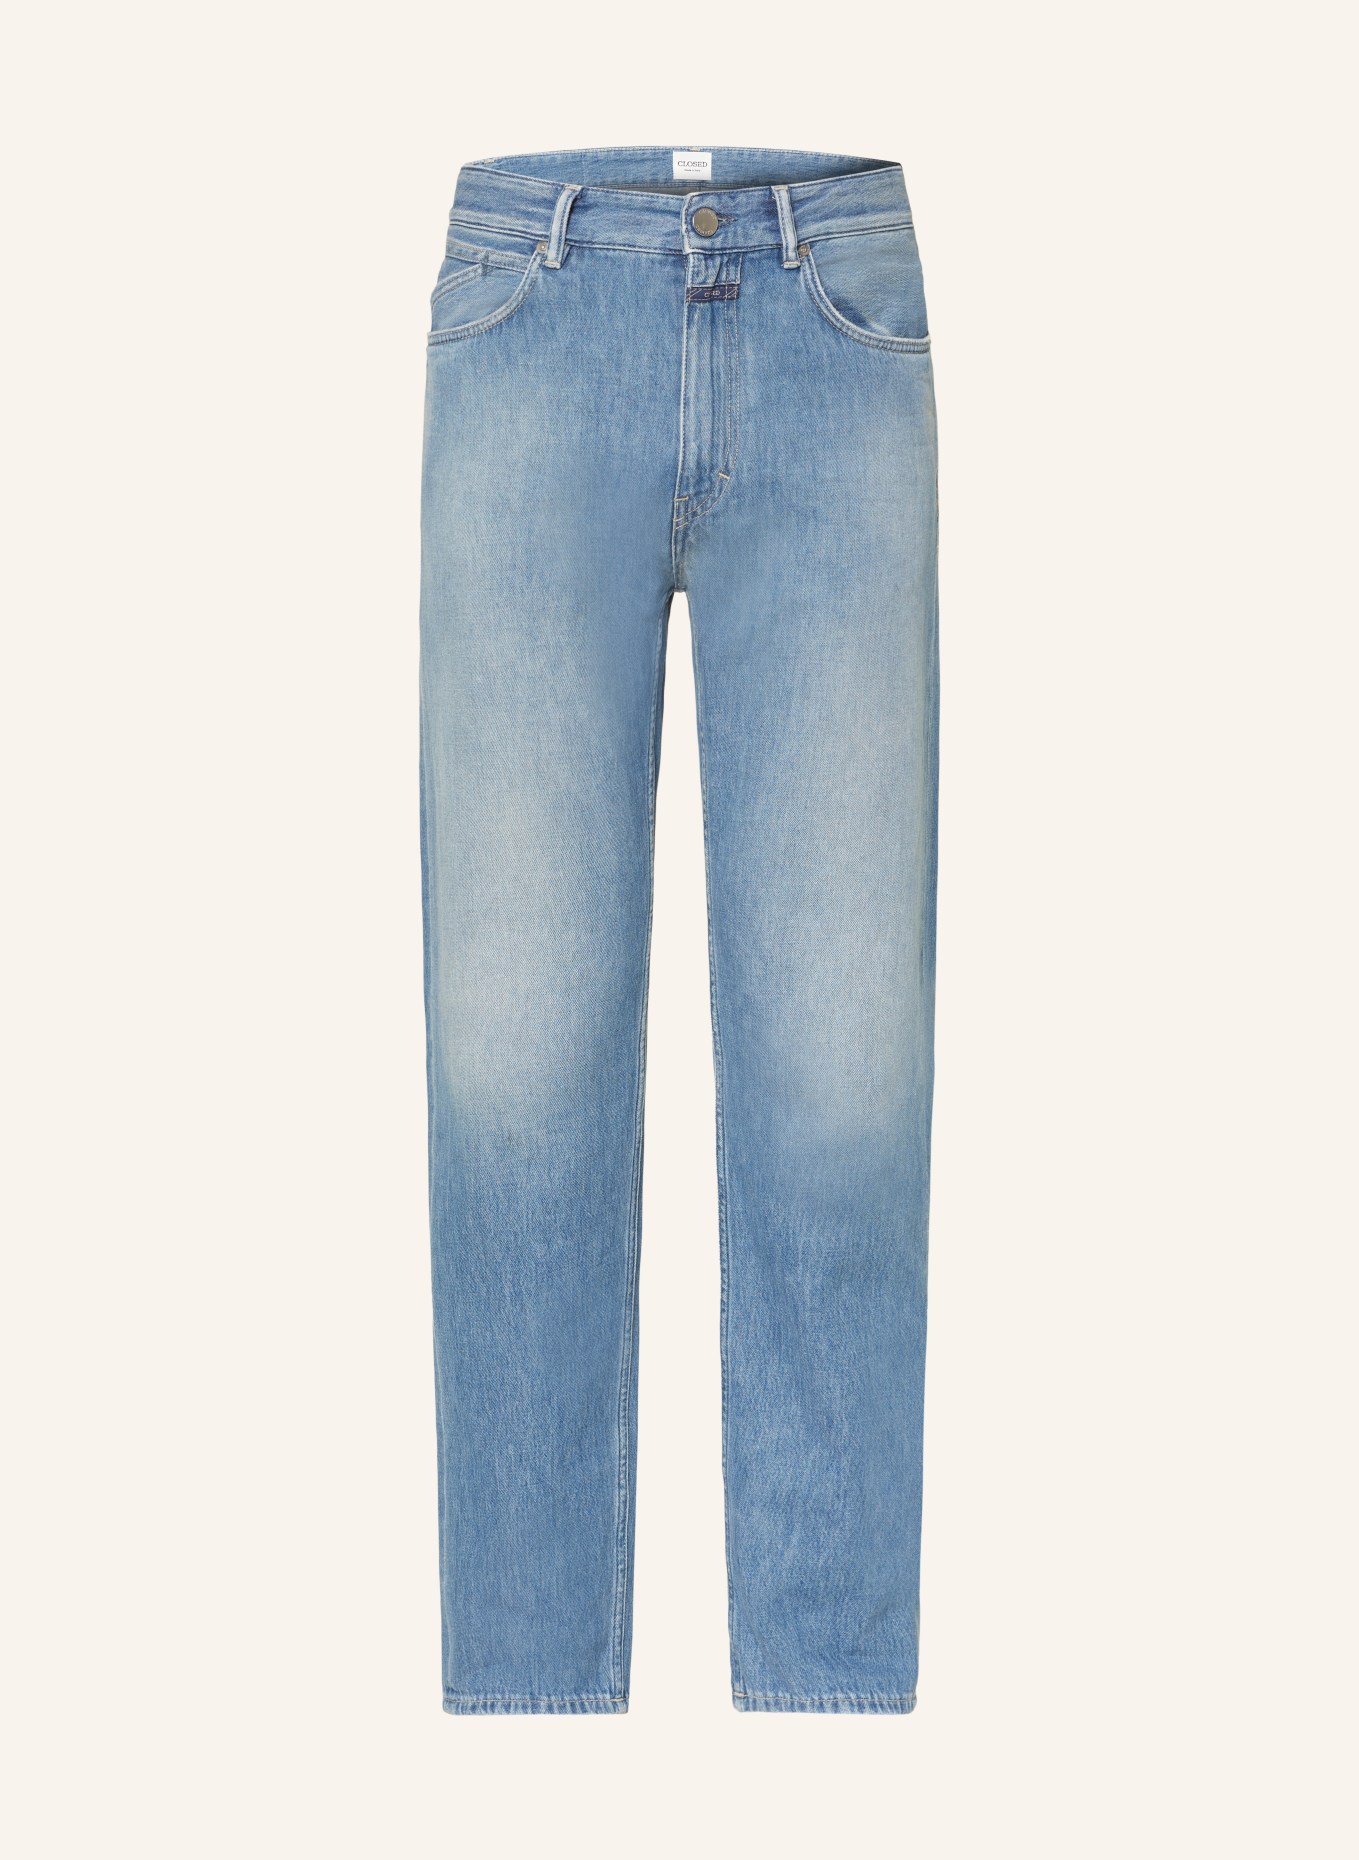 CLOSED Jeans COOPER TRUE Slim Fit, Farbe: LBL Light Blue (Bild 1)